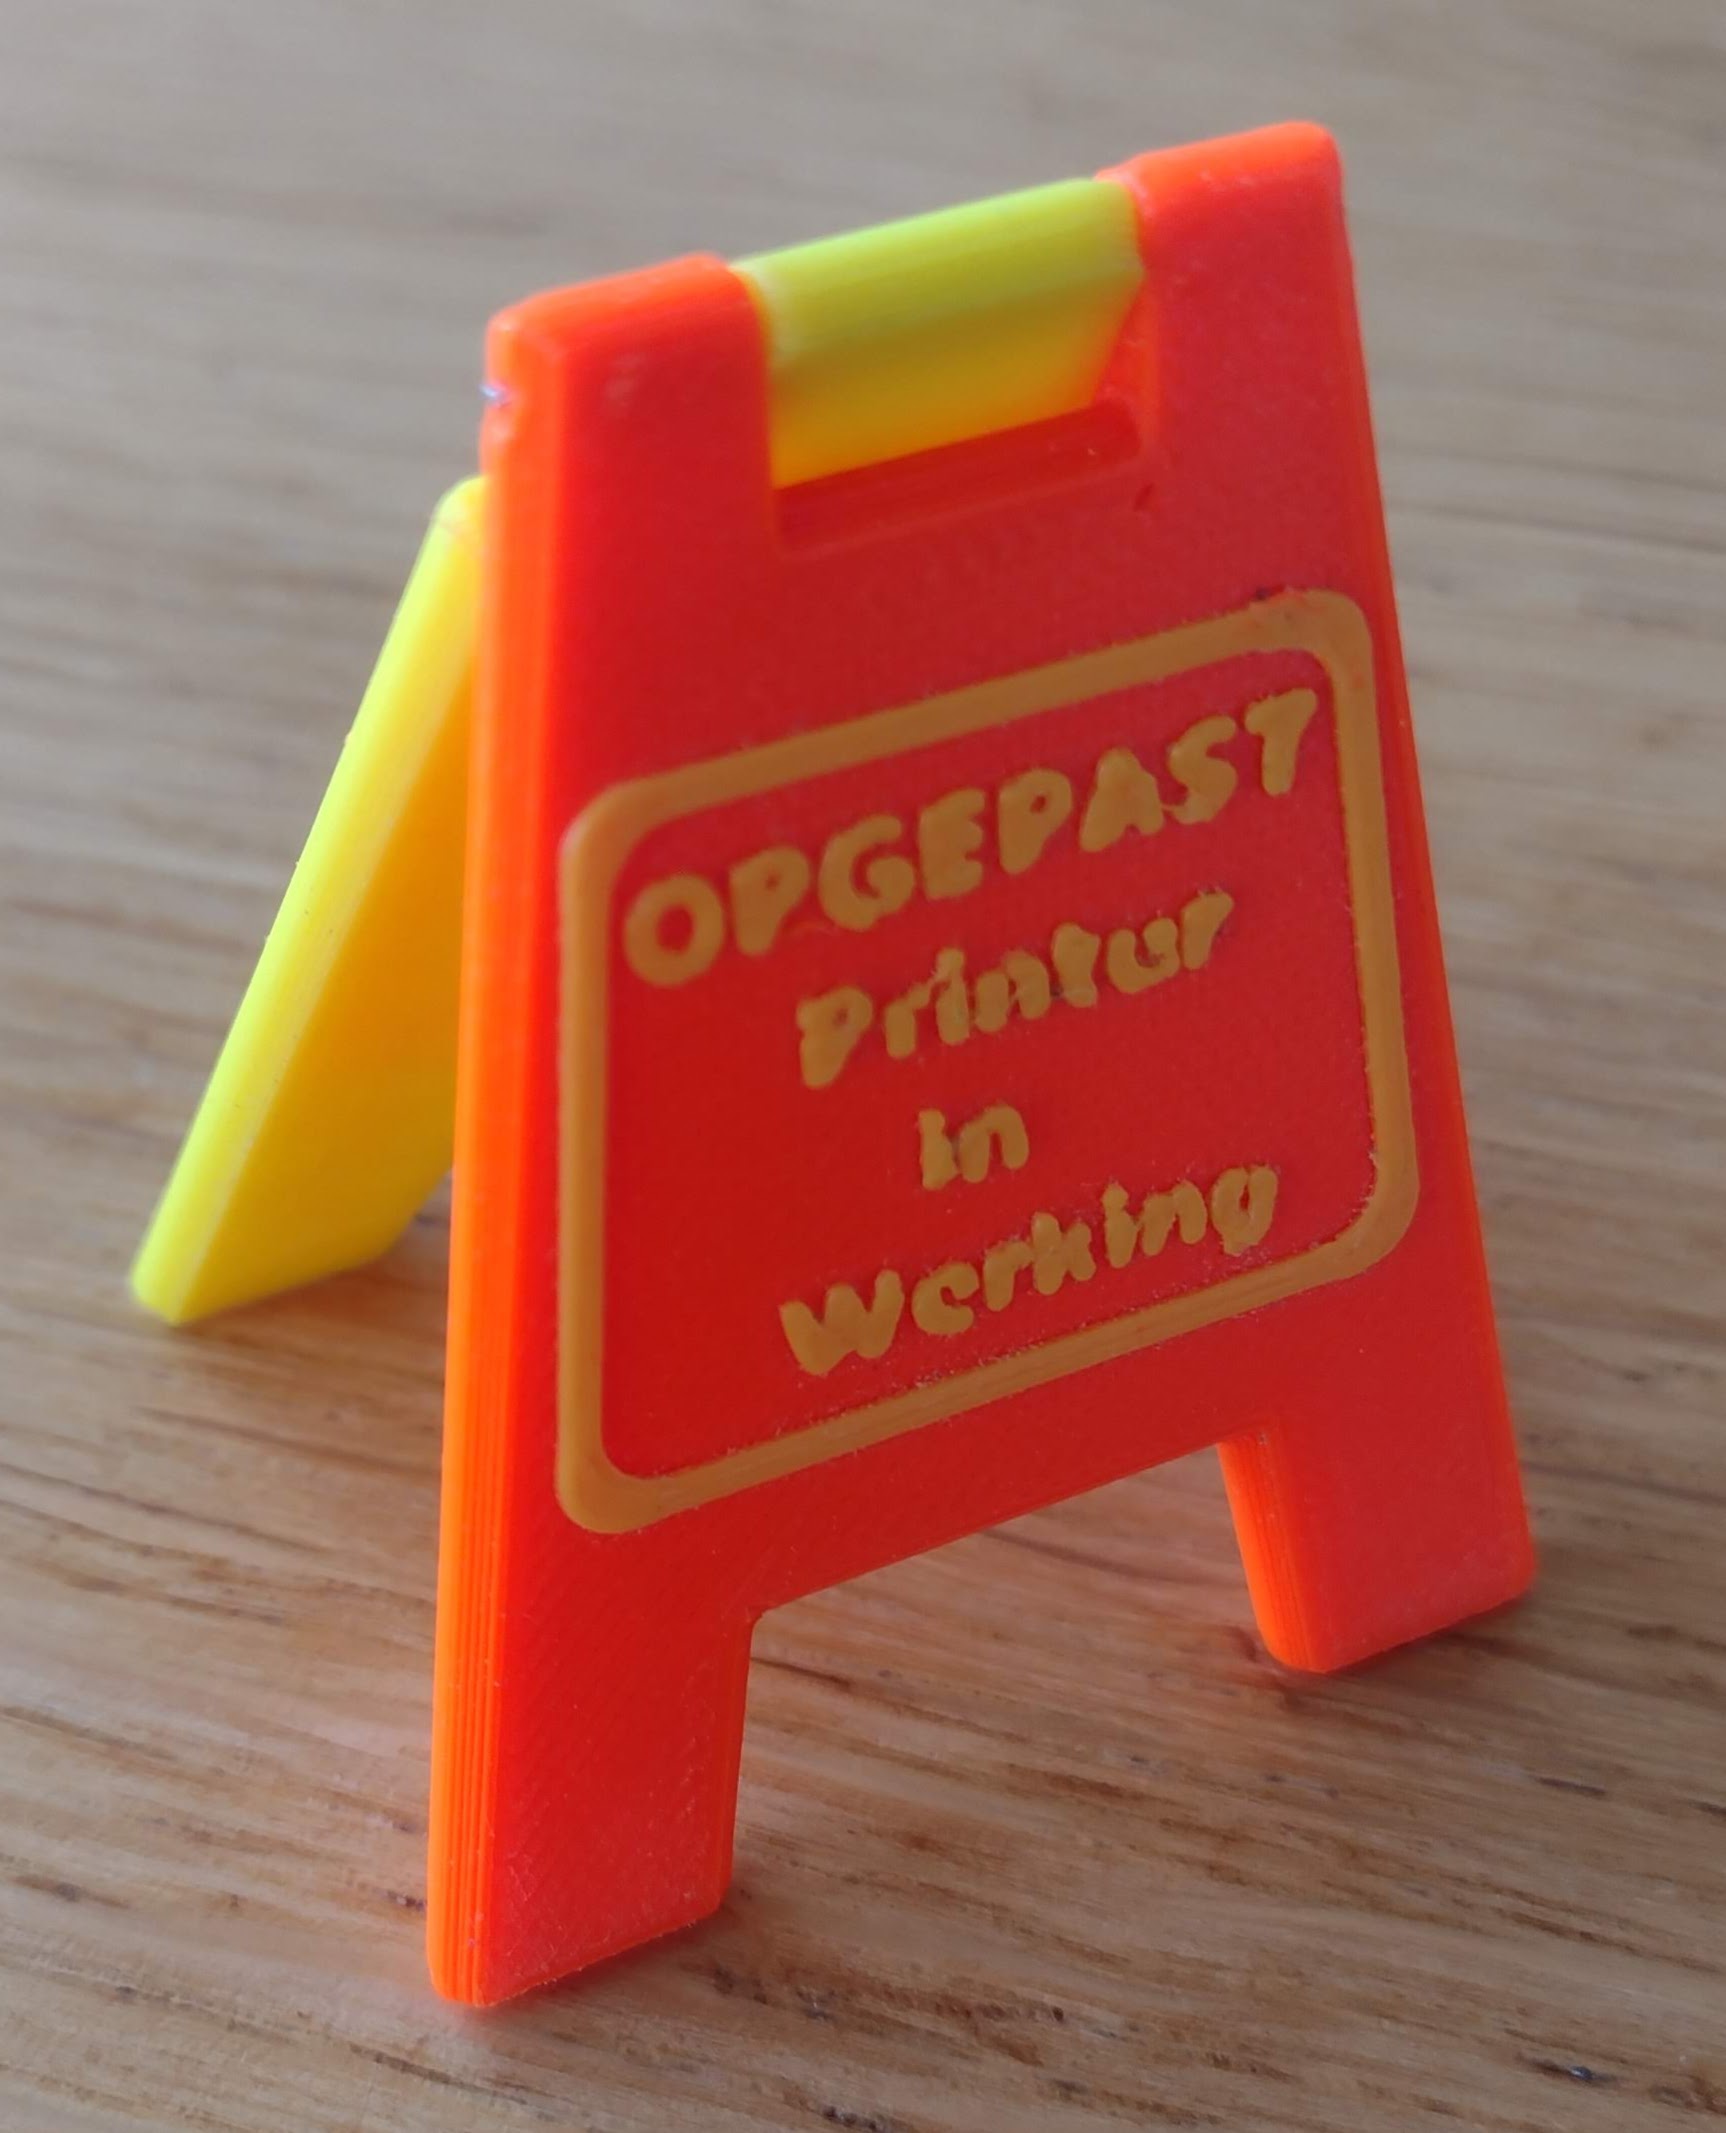 Opgepast printer in werking. Attention printer in operation.